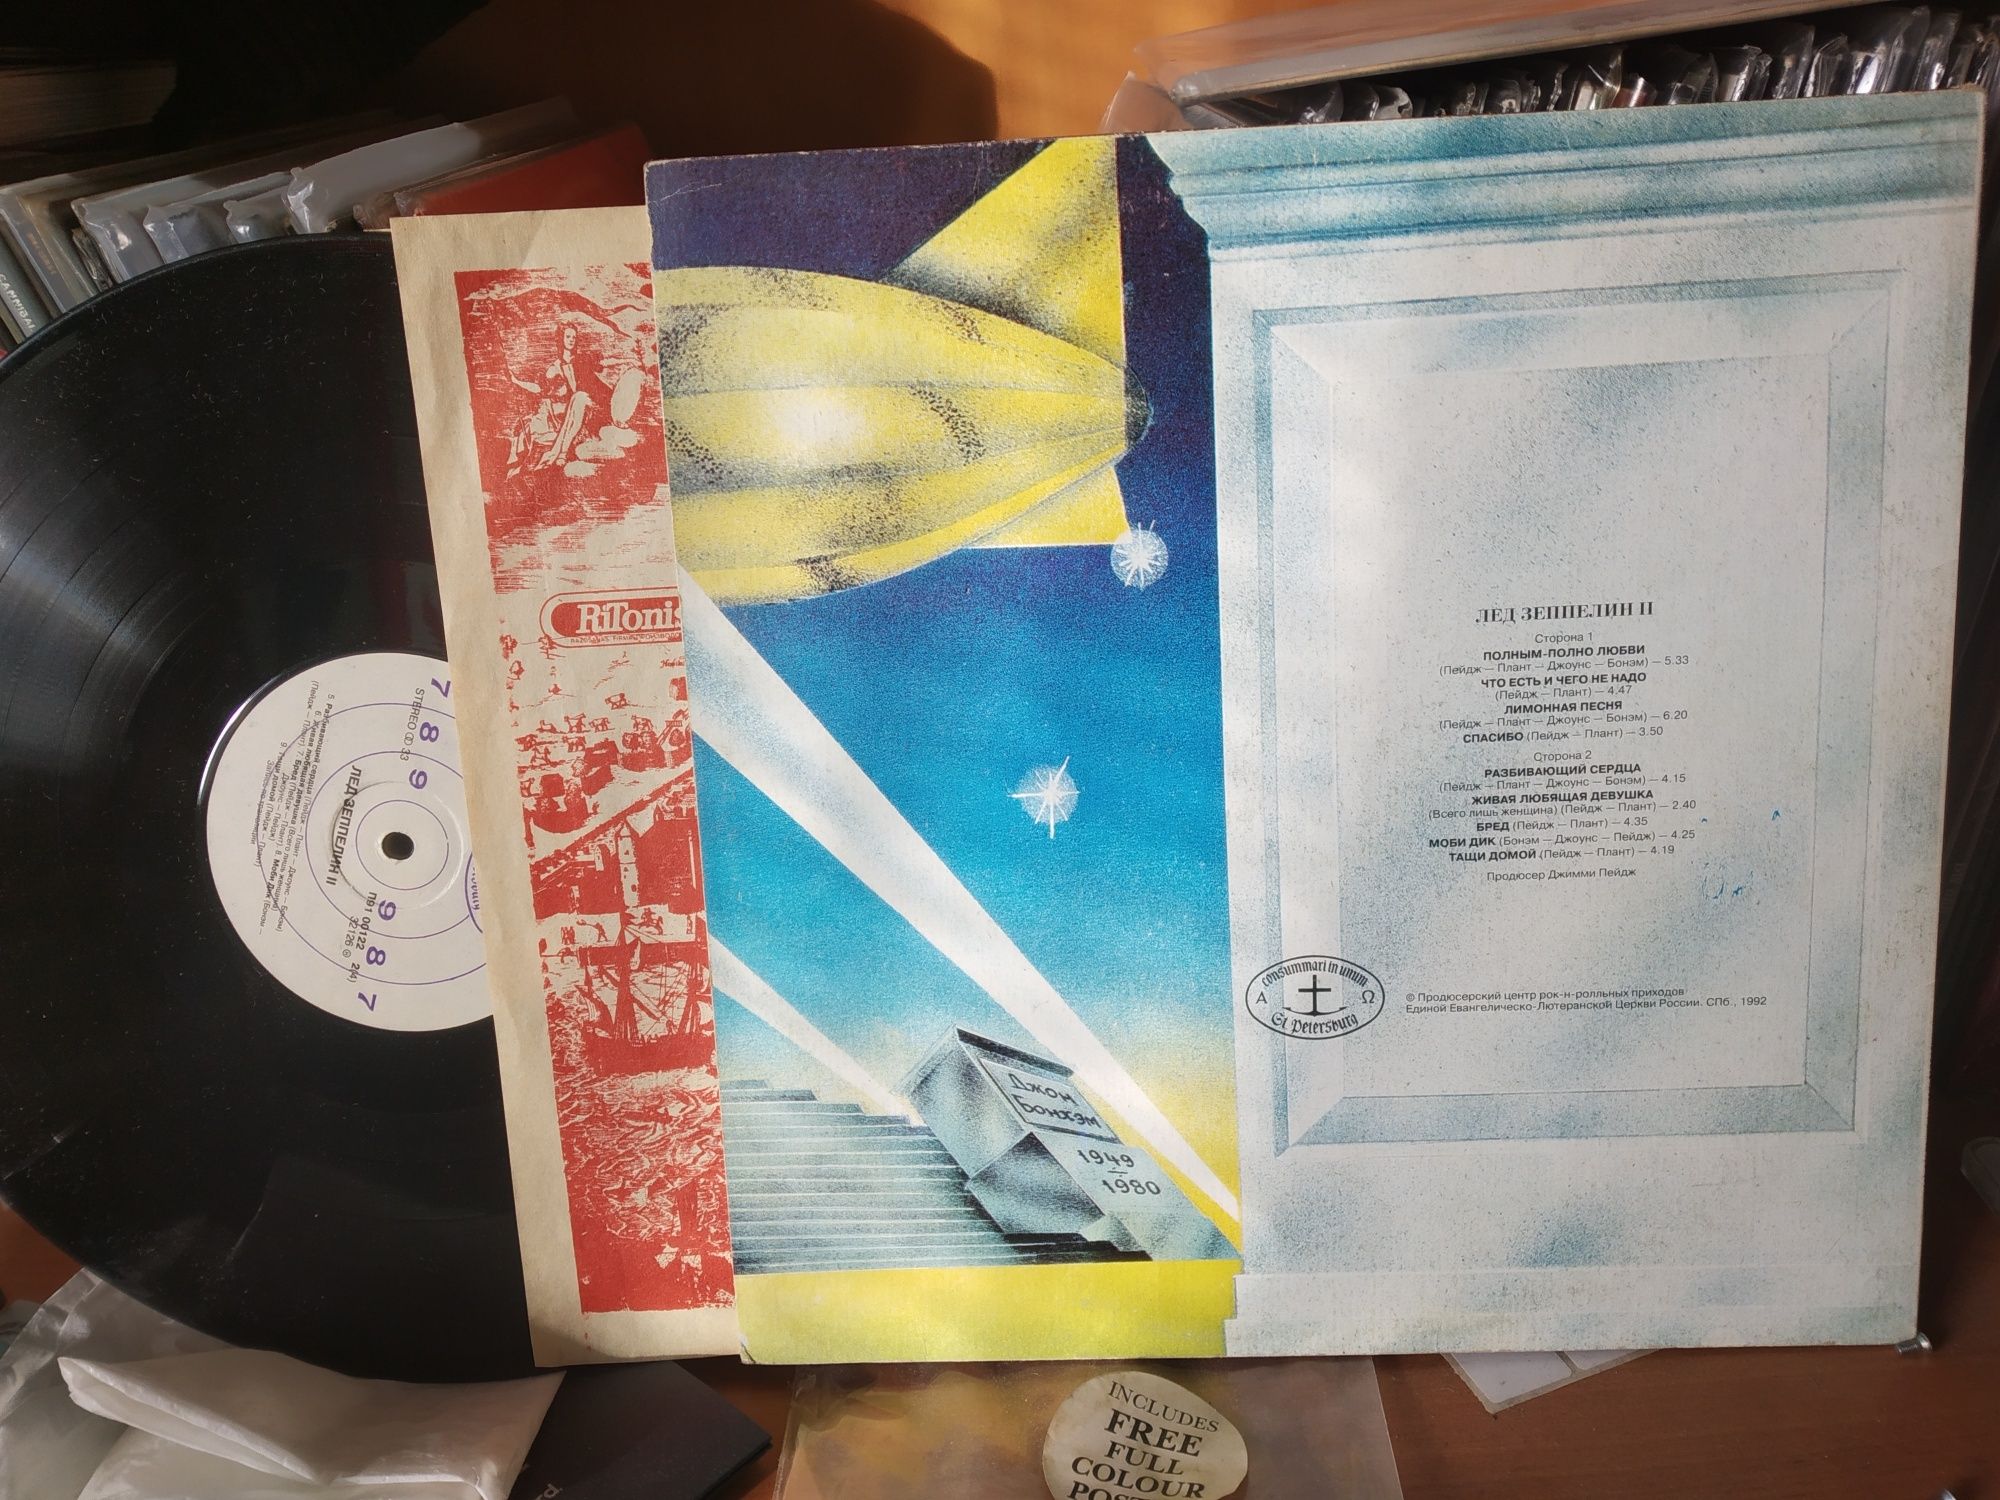 Led Zeppelin 2,  Antrop, vinyl, пластинки, платiвки. Редкое издание.